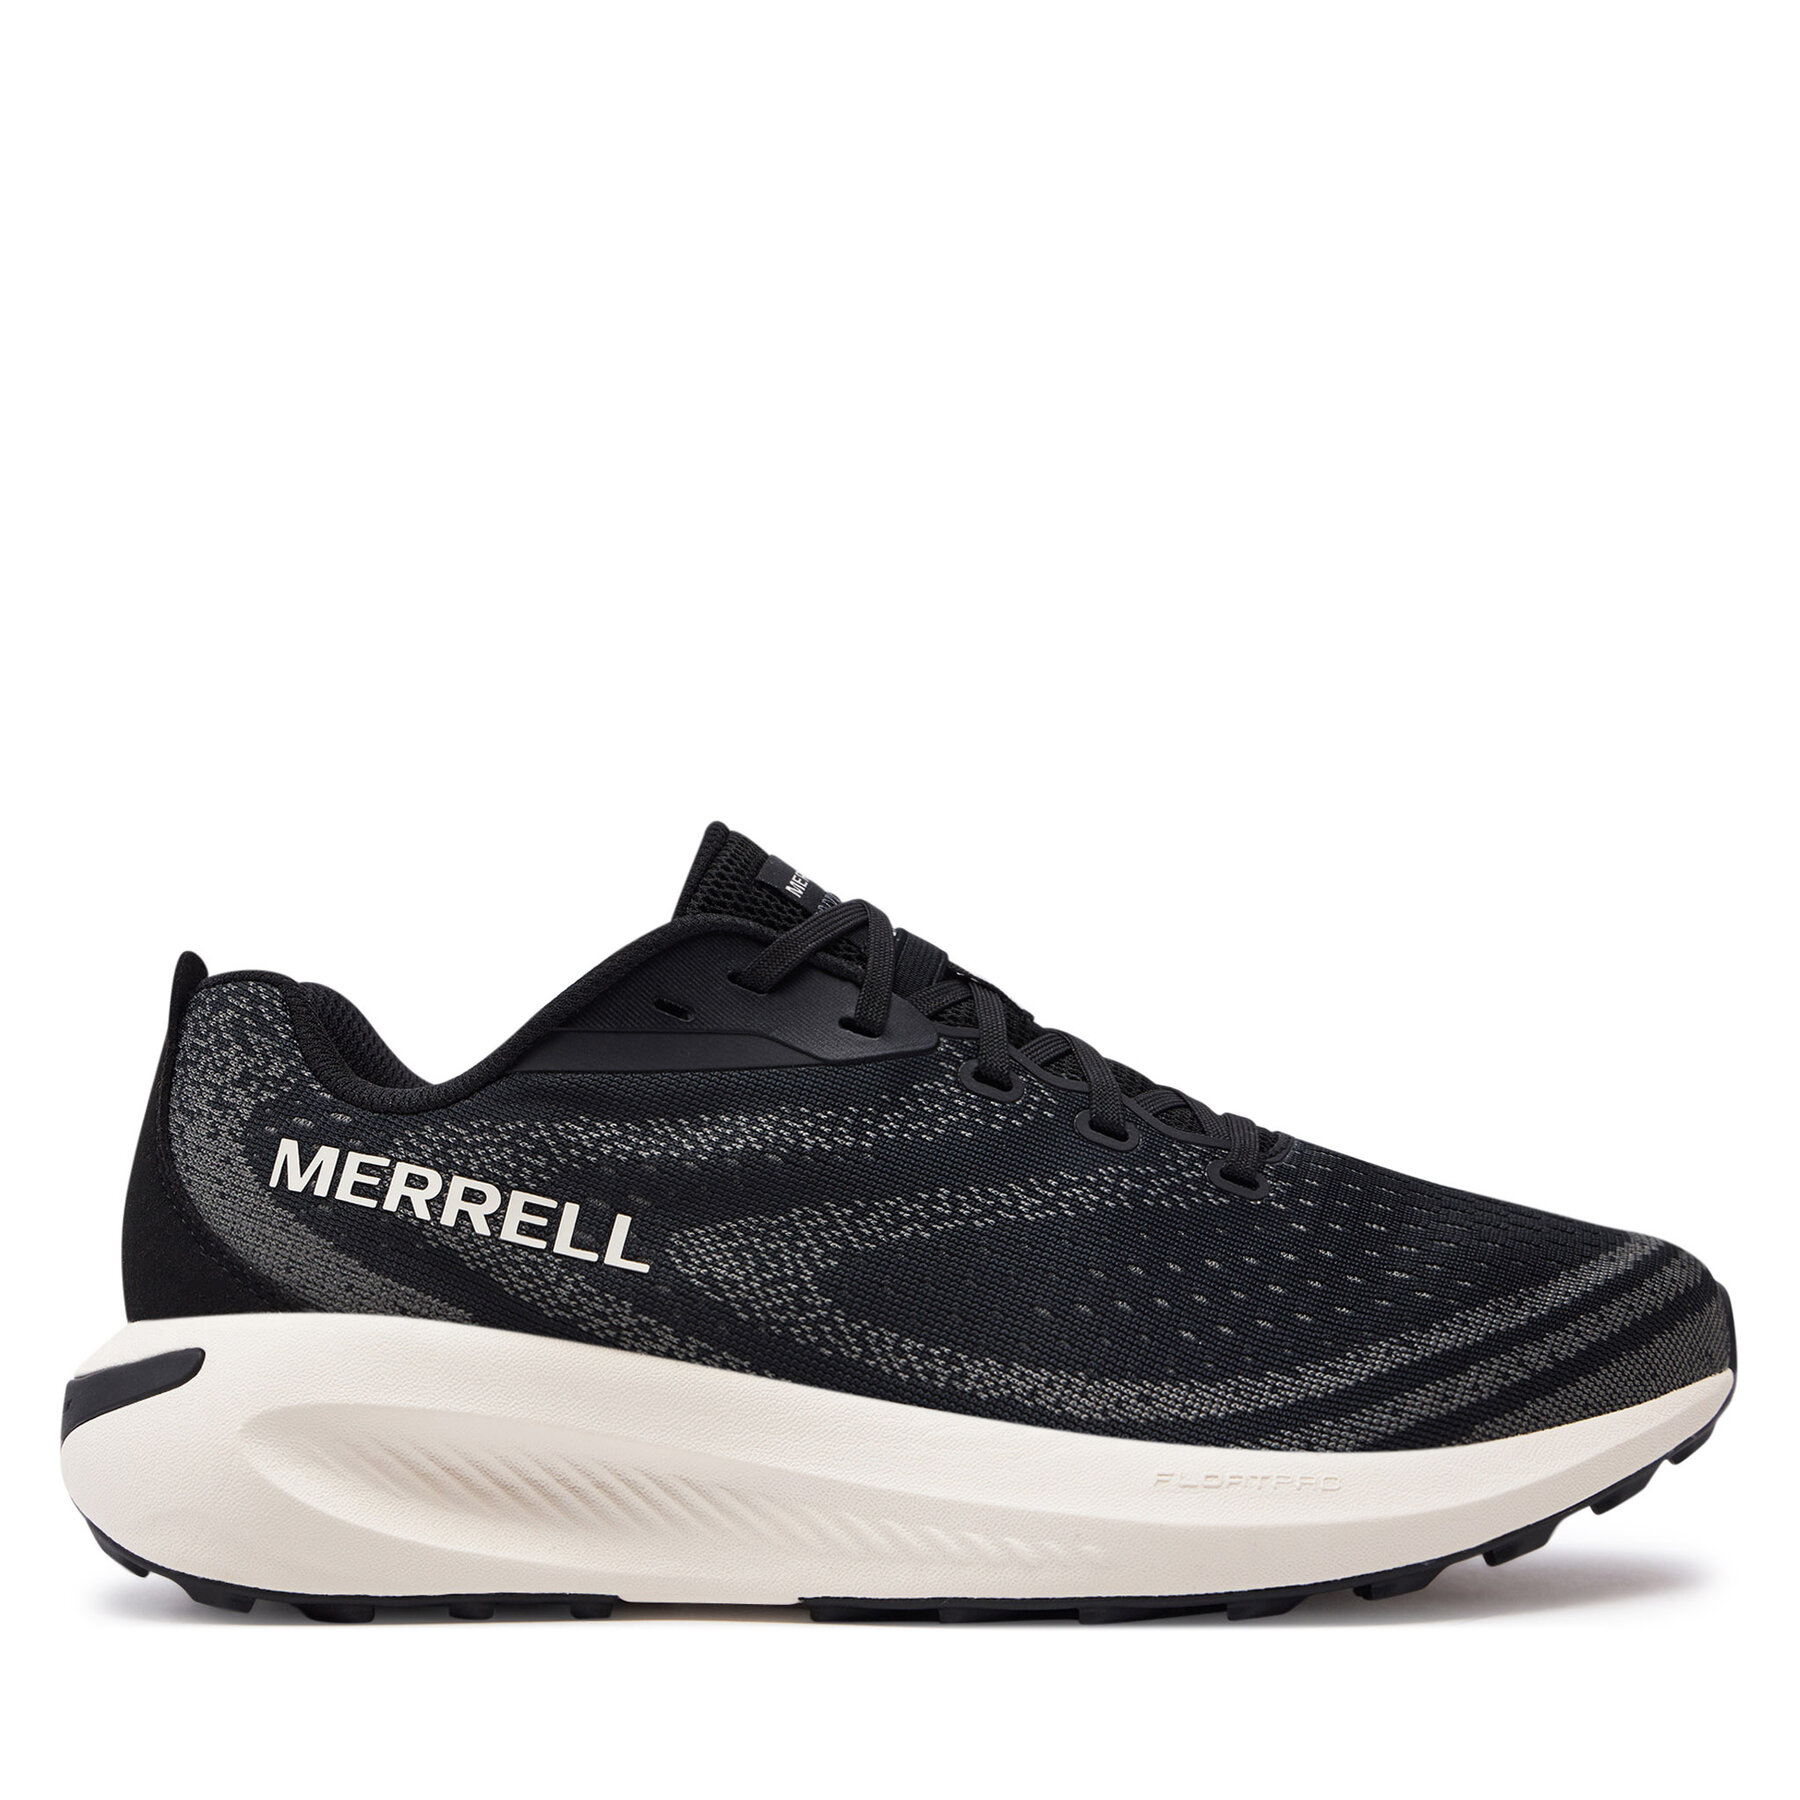 Laufschuhe Merrell Morphlite J068167 Schwarz von Merrell